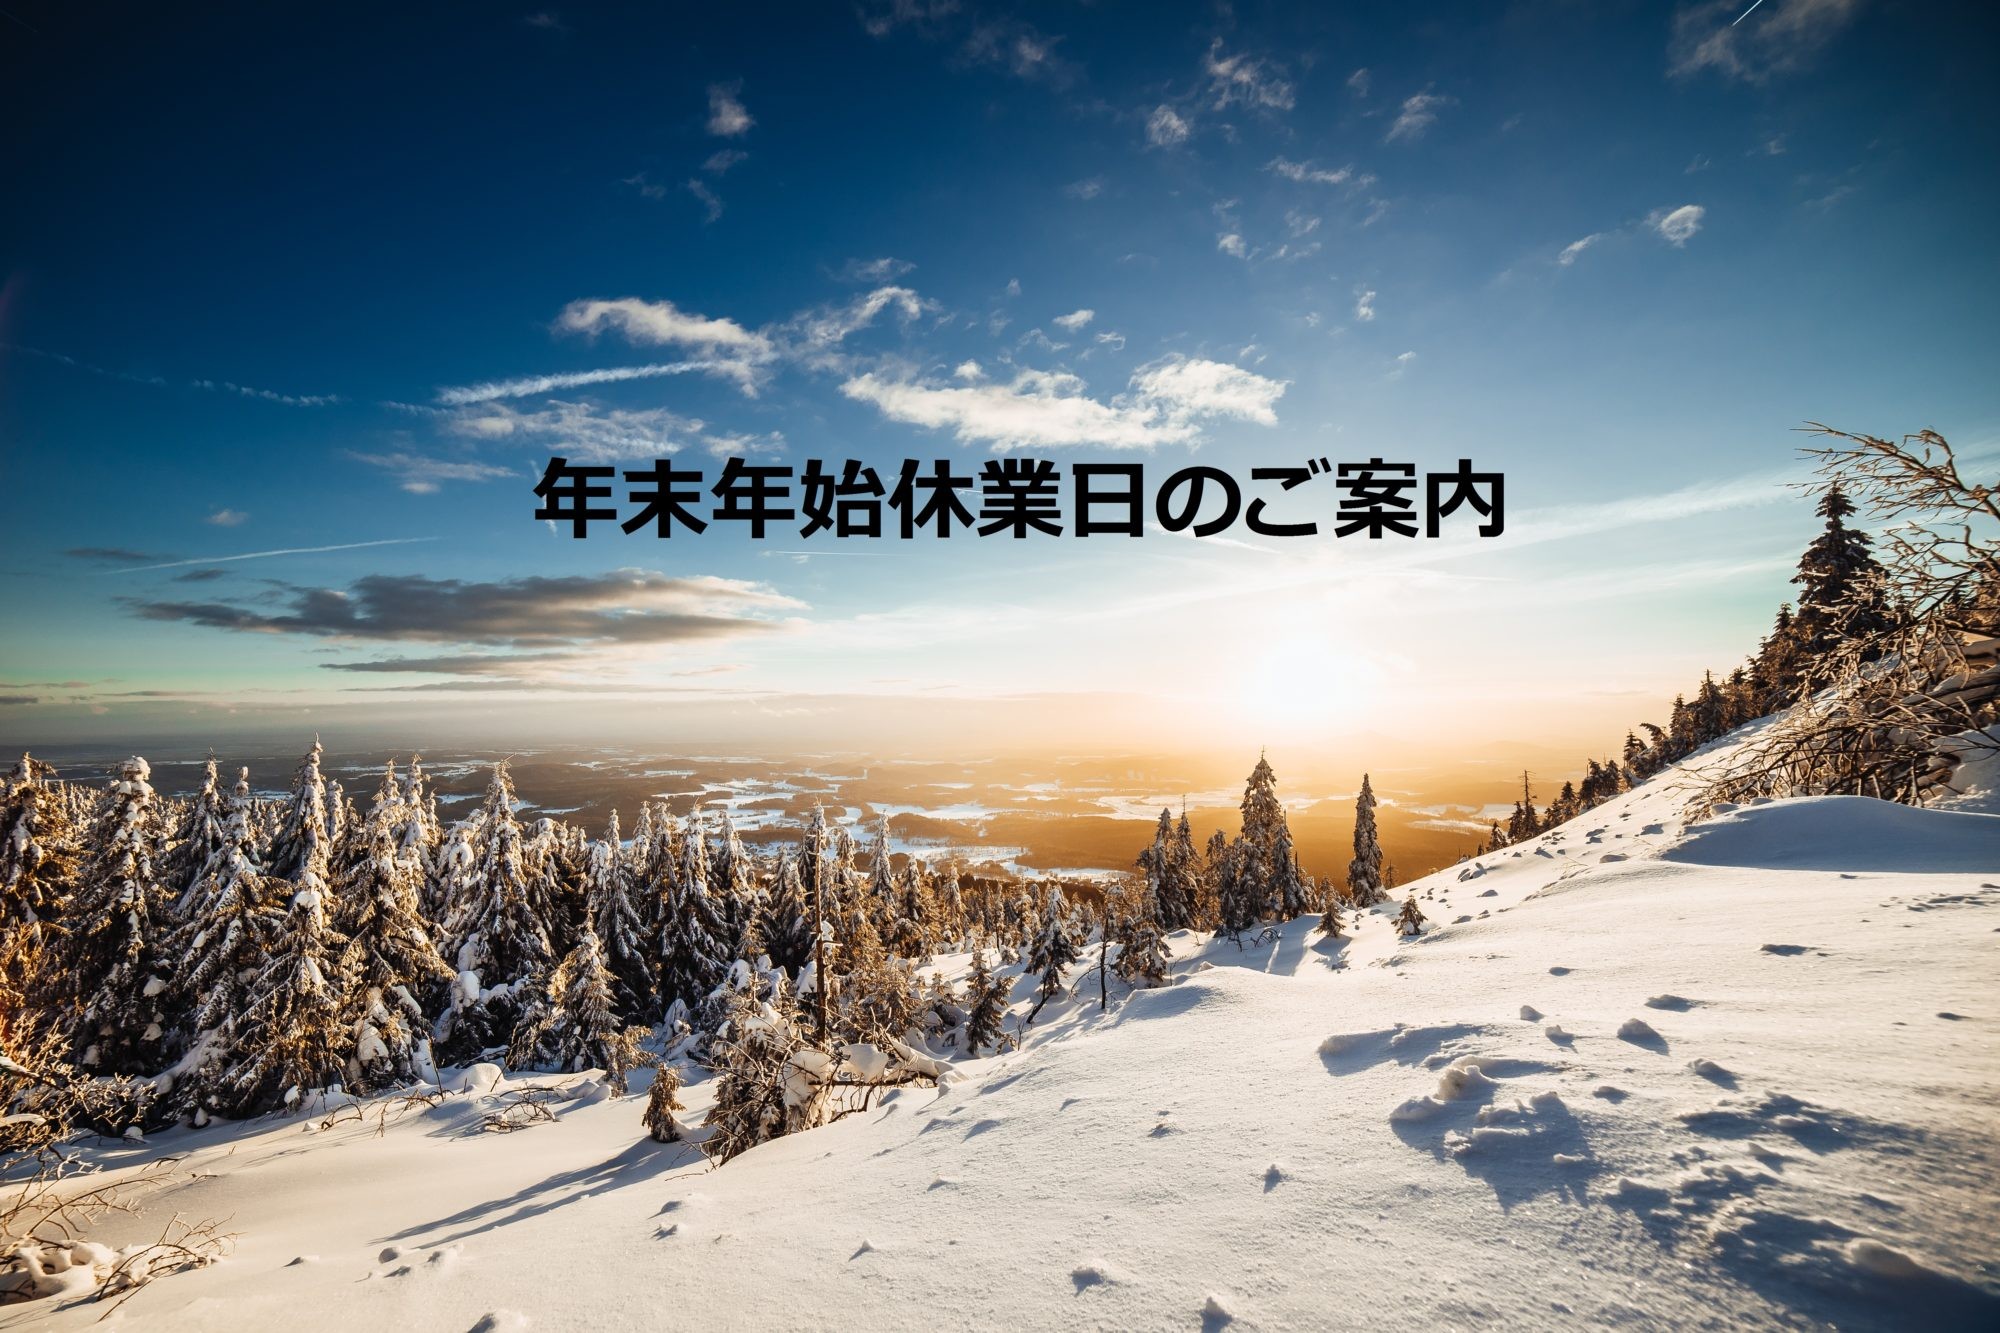 perfect-winter-scenery-in-the-mountains-picjumbo-com